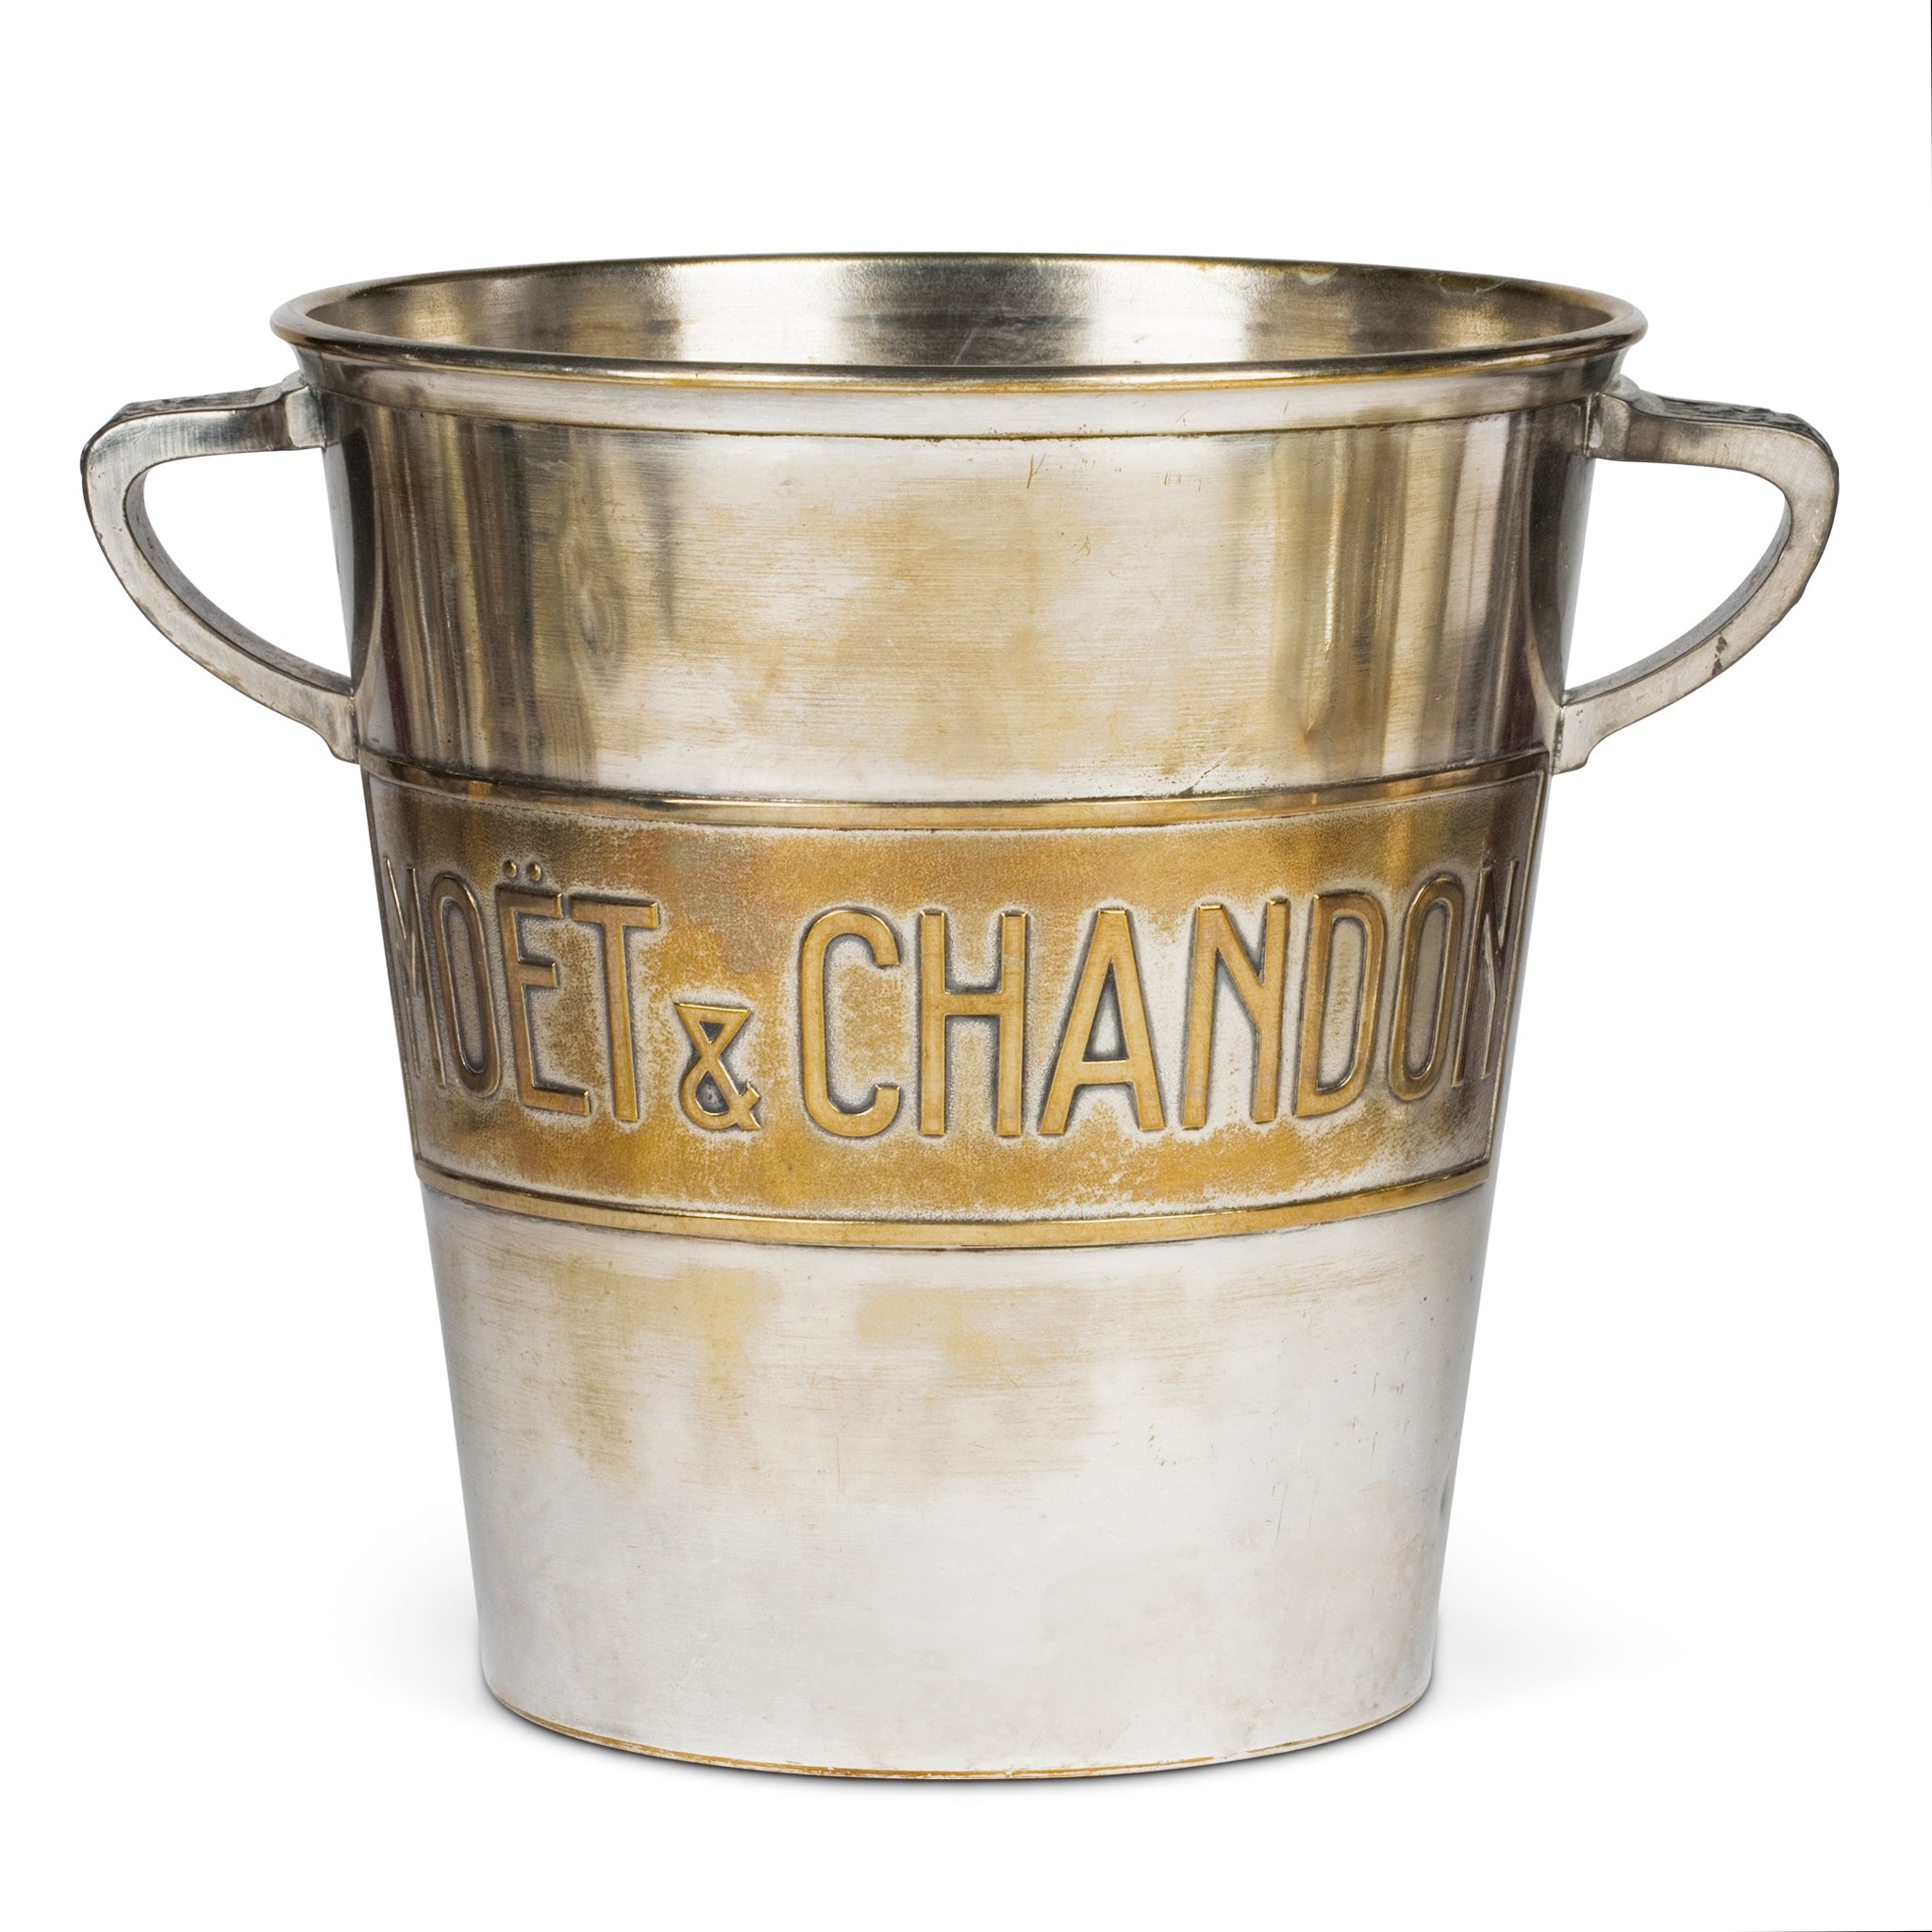 Vintage Moët & Chandon Silver Champagne Bucket